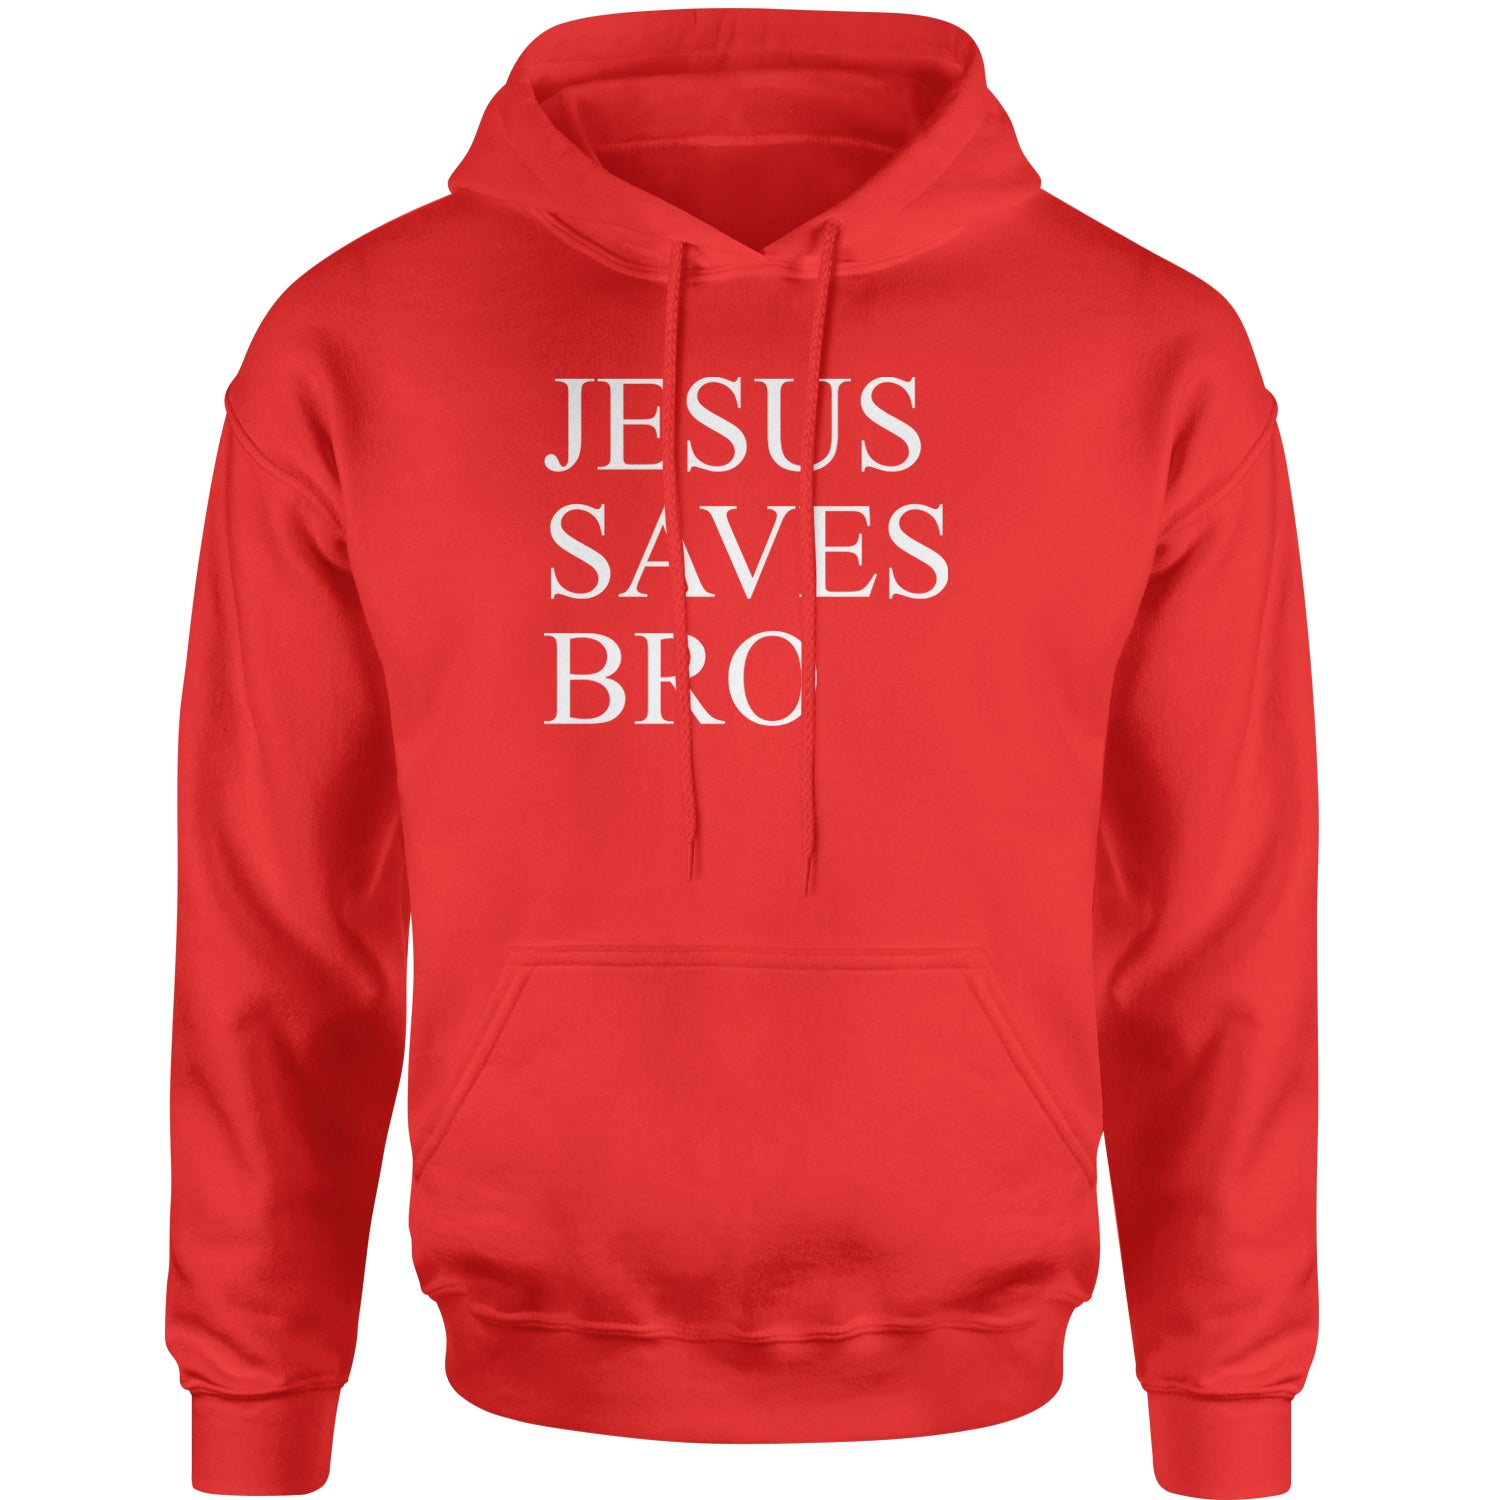 Jesus Saves Bro Adult Hoodie Sweatshirt catholic, christian, christianity, church, jesus, religion, religuous by Expression Tees